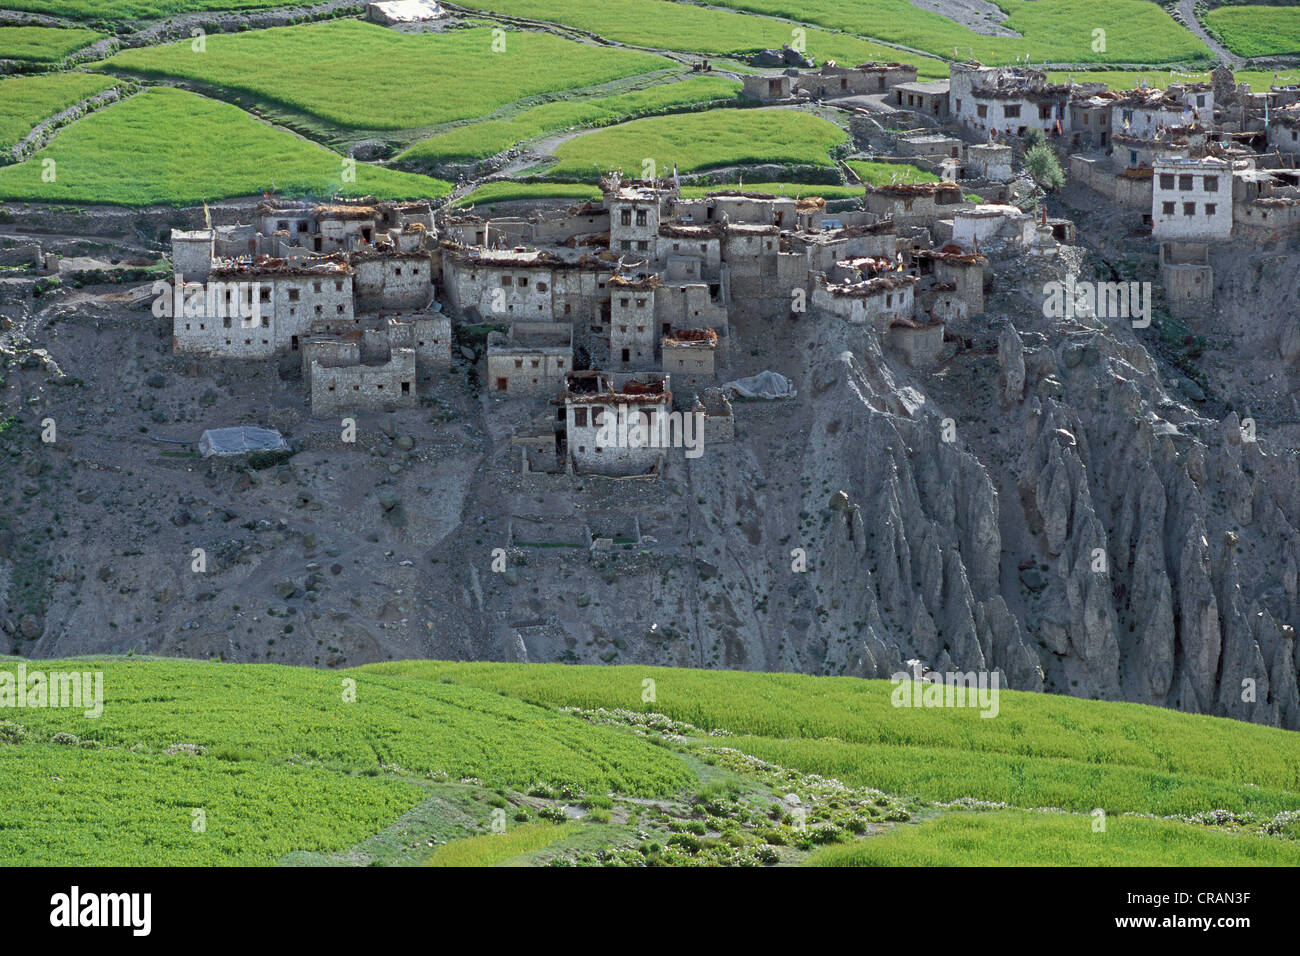 Photaksar village et champs, Zanskar, Ladakh, Himalaya indien, le Jammu-et-Cachemire, l'Inde du nord, Inde, Asie Banque D'Images